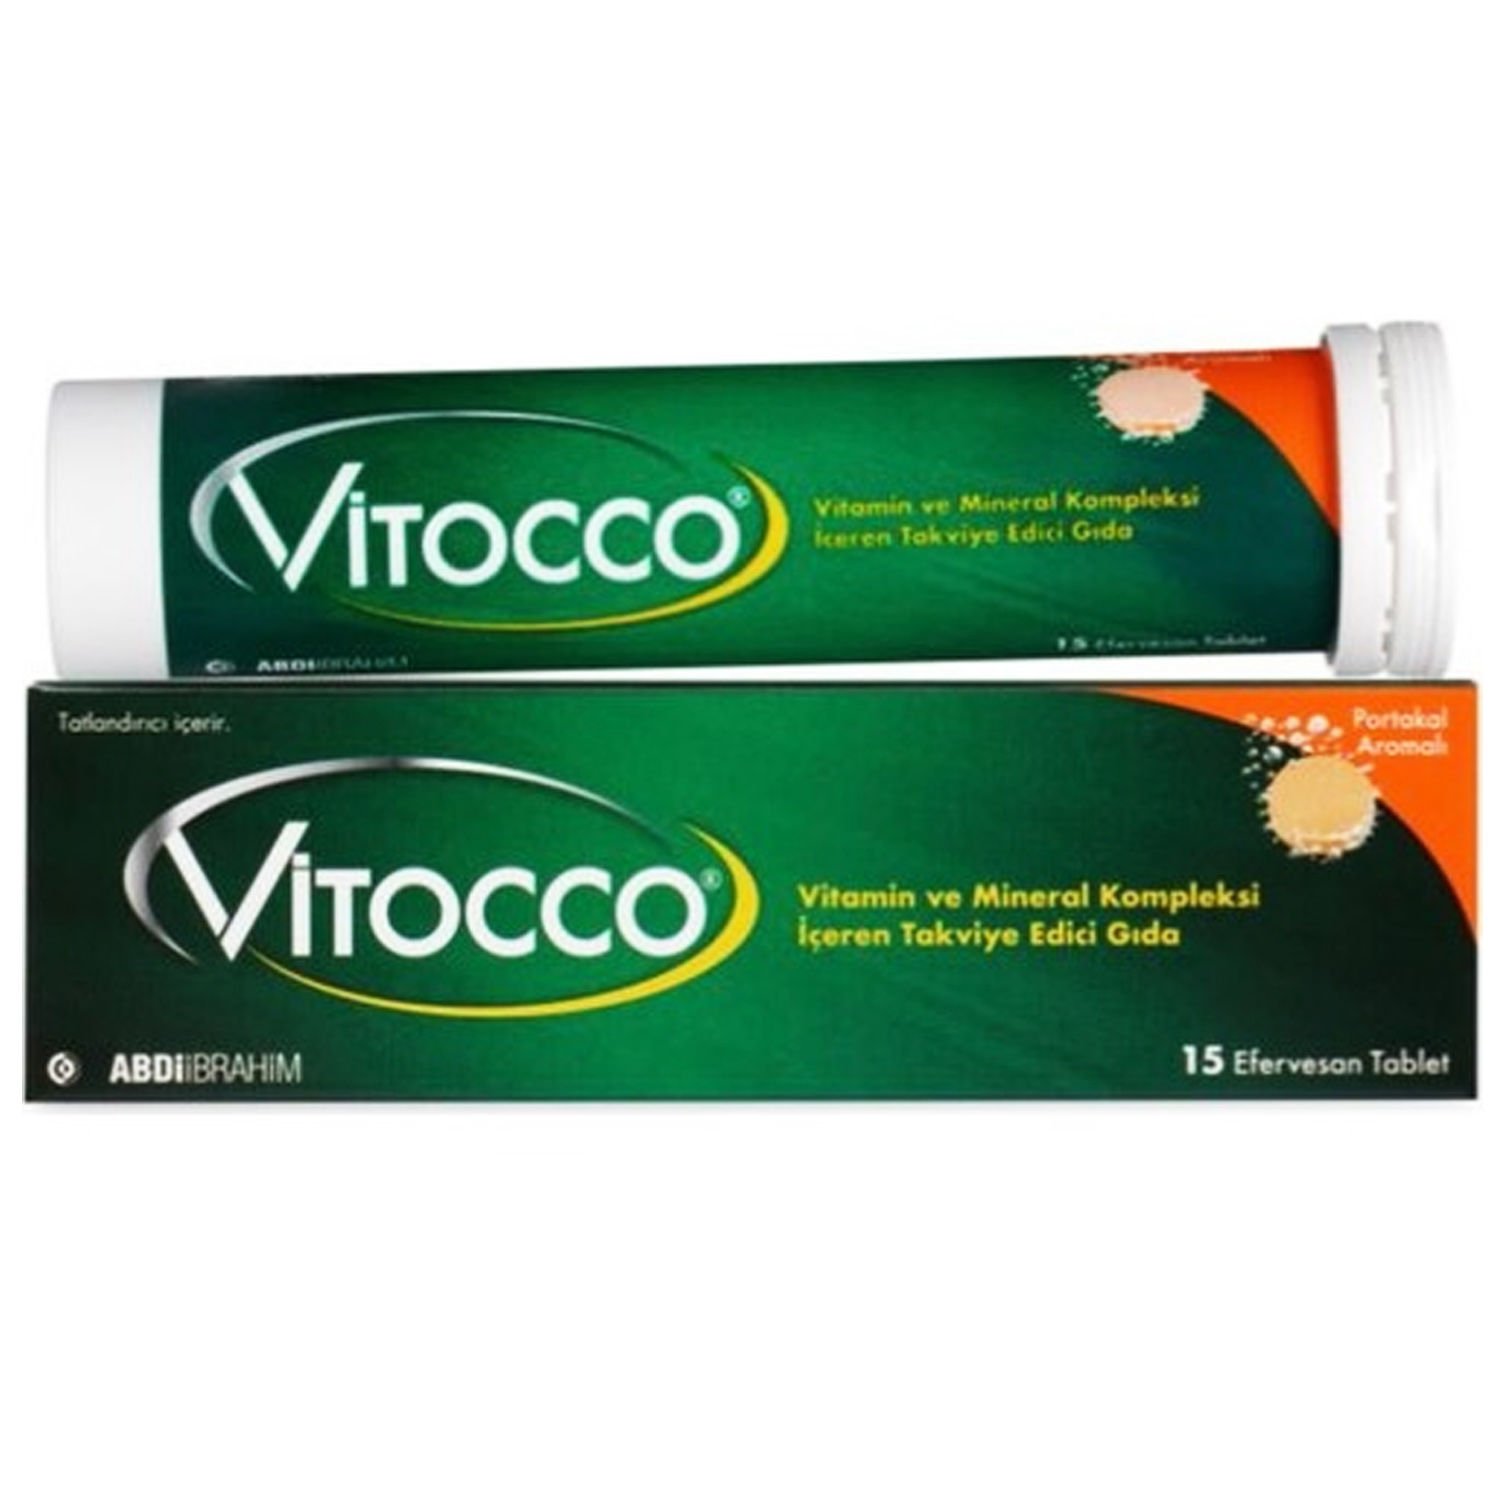 Vitocco Vitamin Ve Mineral Kompleksi 15 Efervesan Tablet